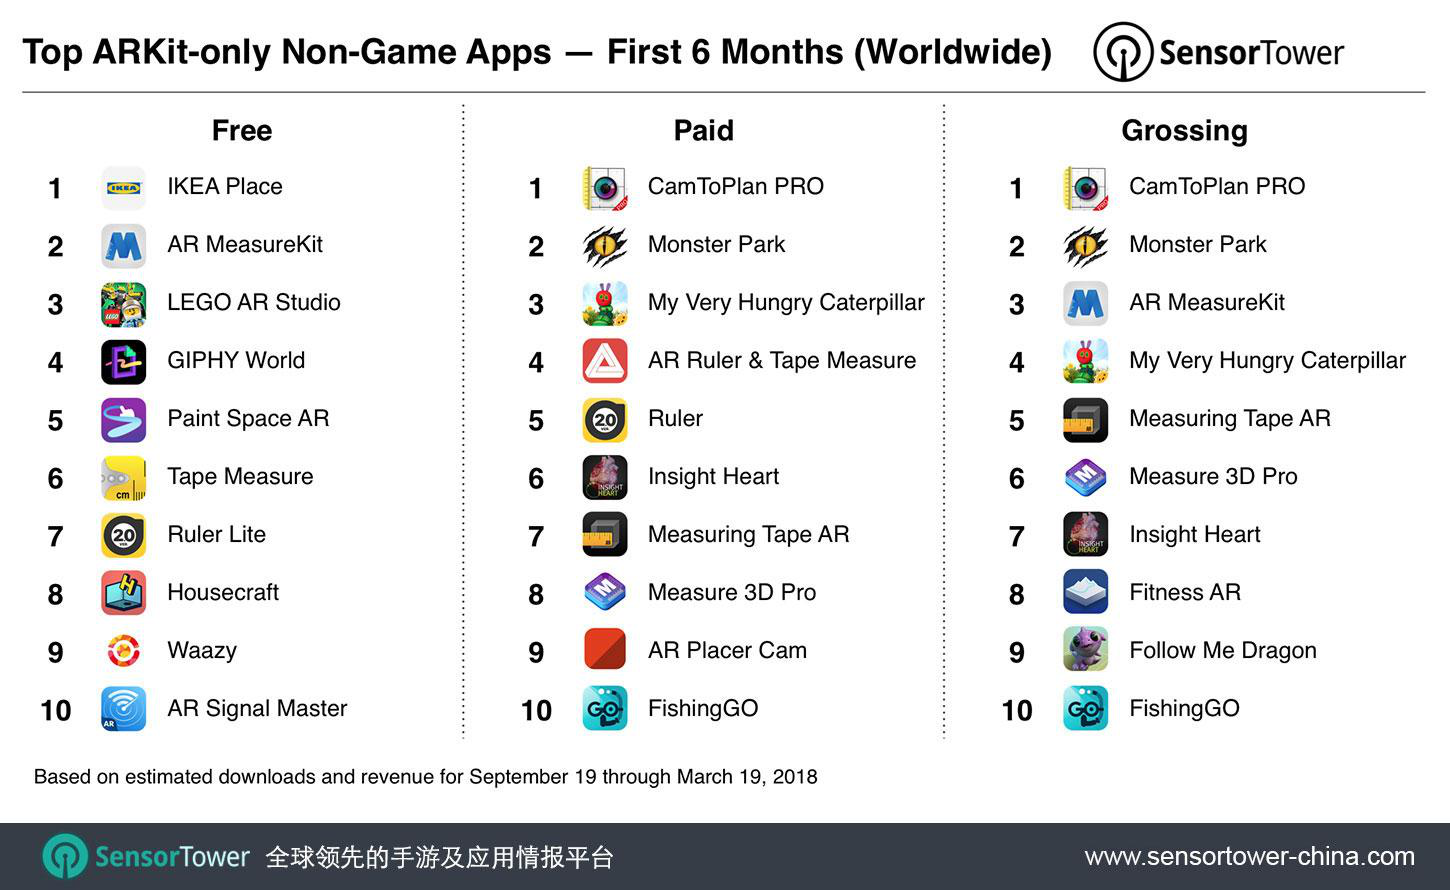 TOP10 领先 ARKit 非手游类 App